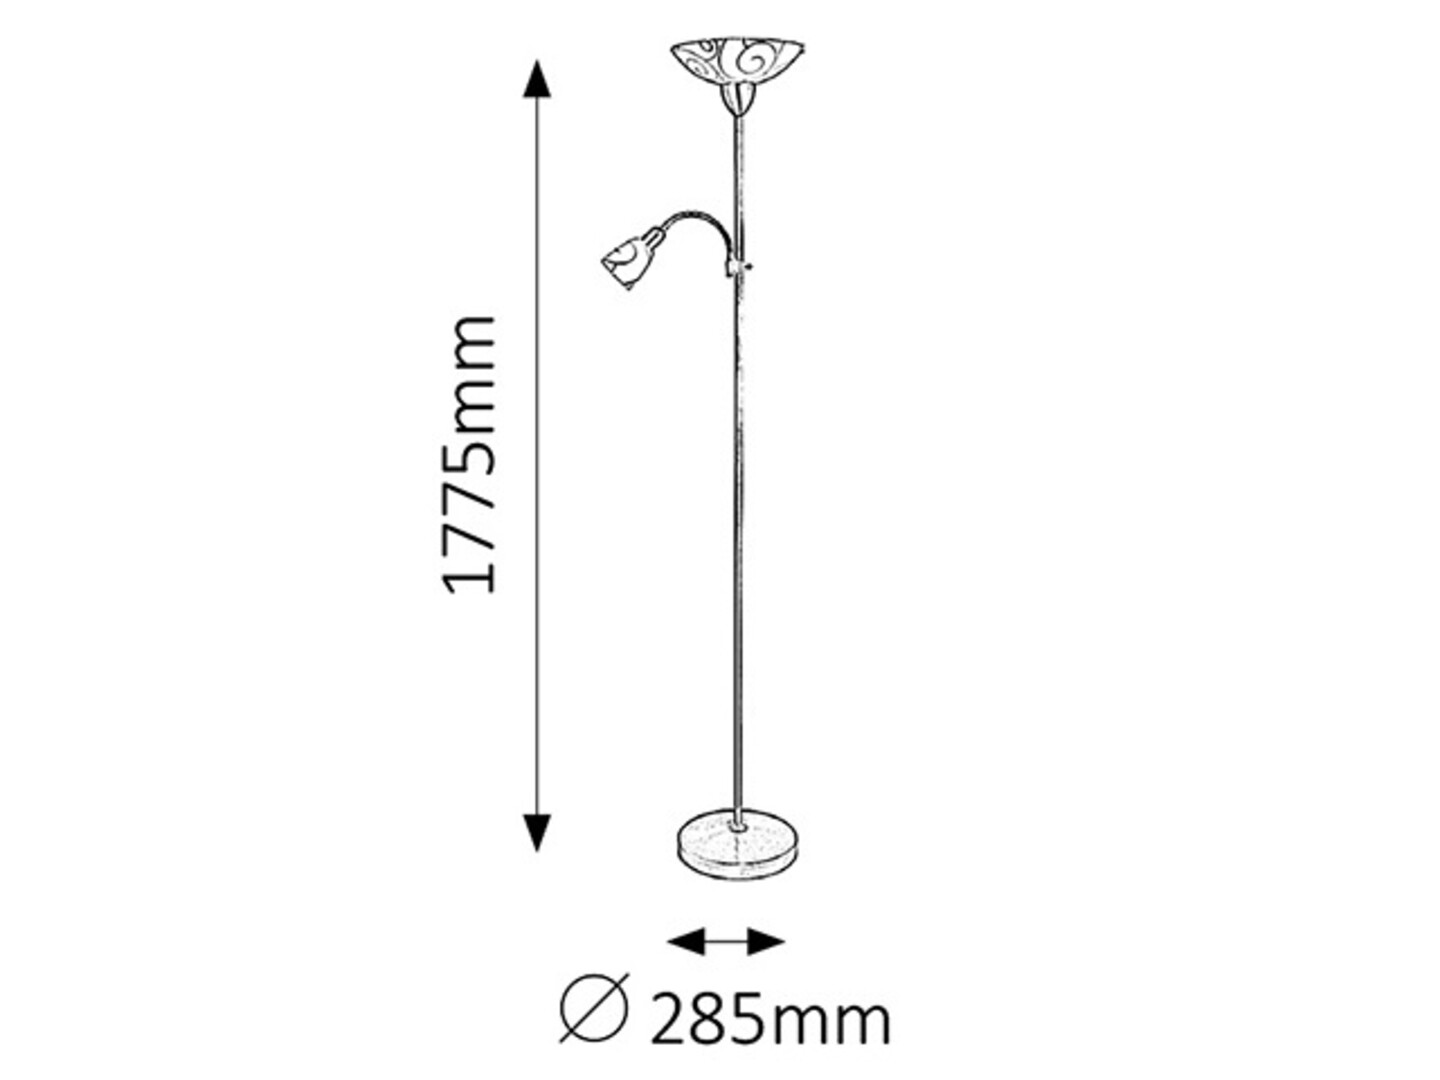 Stehlampe Harmony 4091, E27-E14, Metall, silber-weiß, rund, Standard, ø285mm